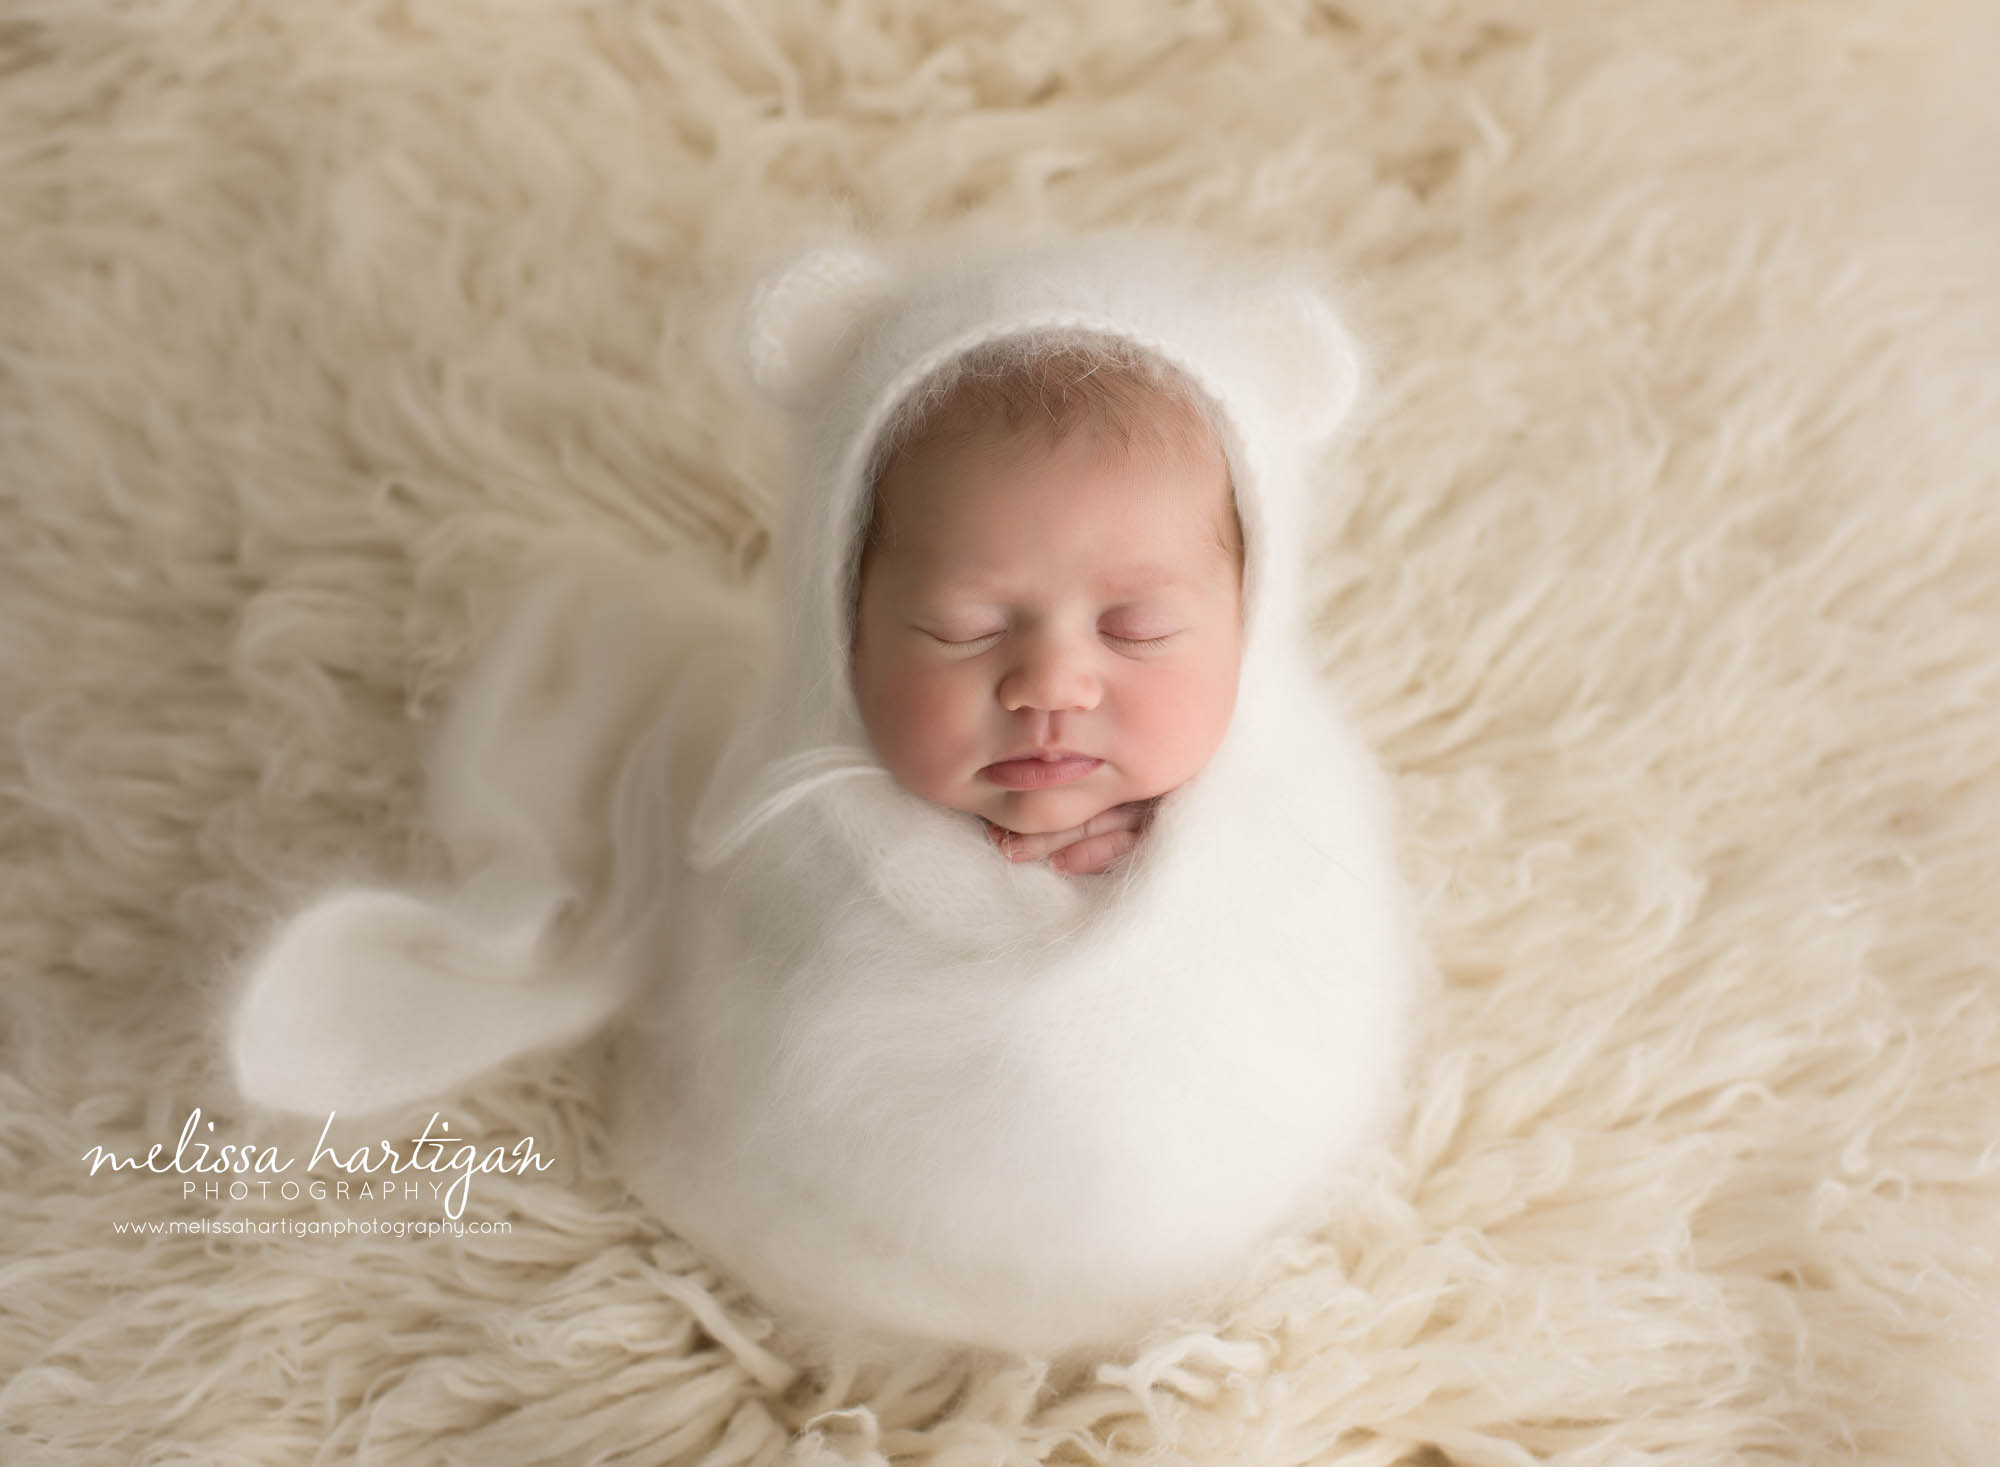 newborn baby girl wrappe din white knit wrap with bear bonnet